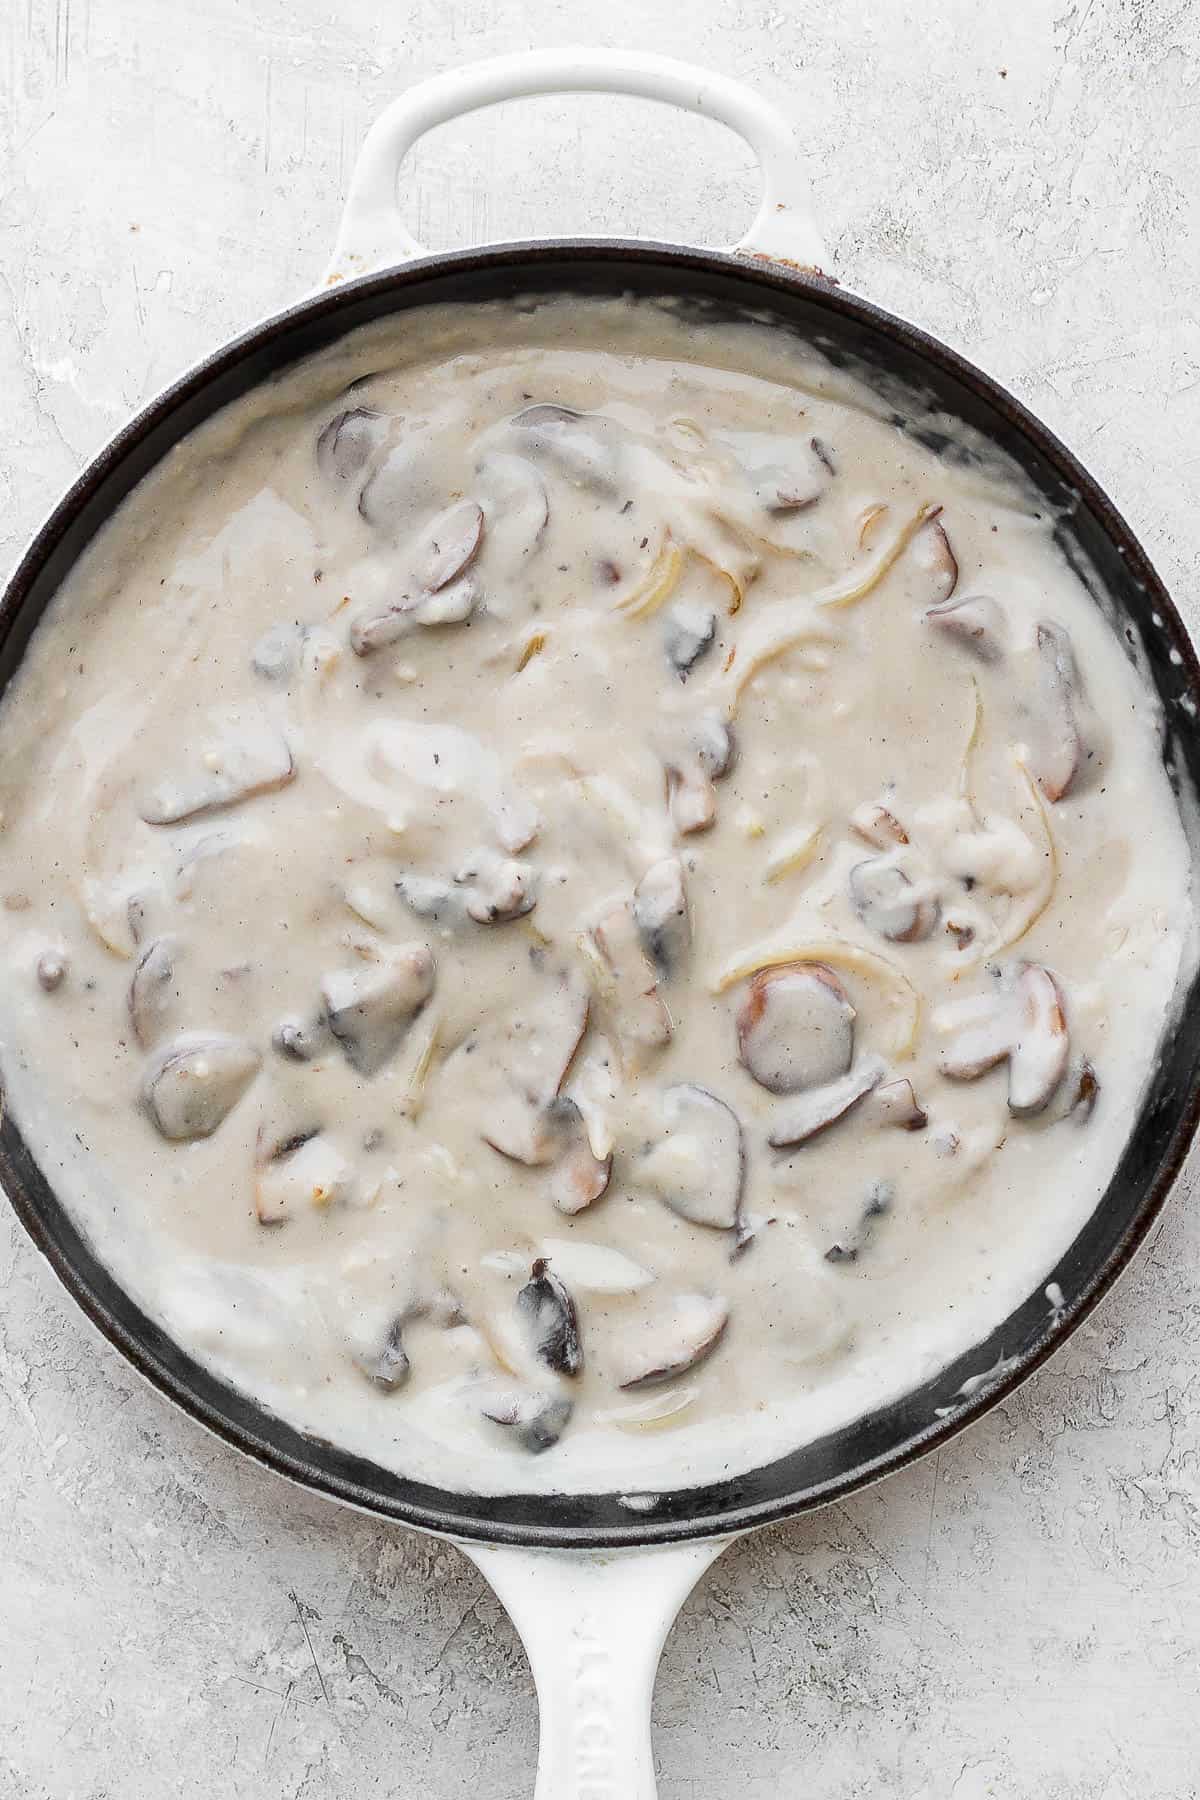 A fully combined creamy mushroom sauce.